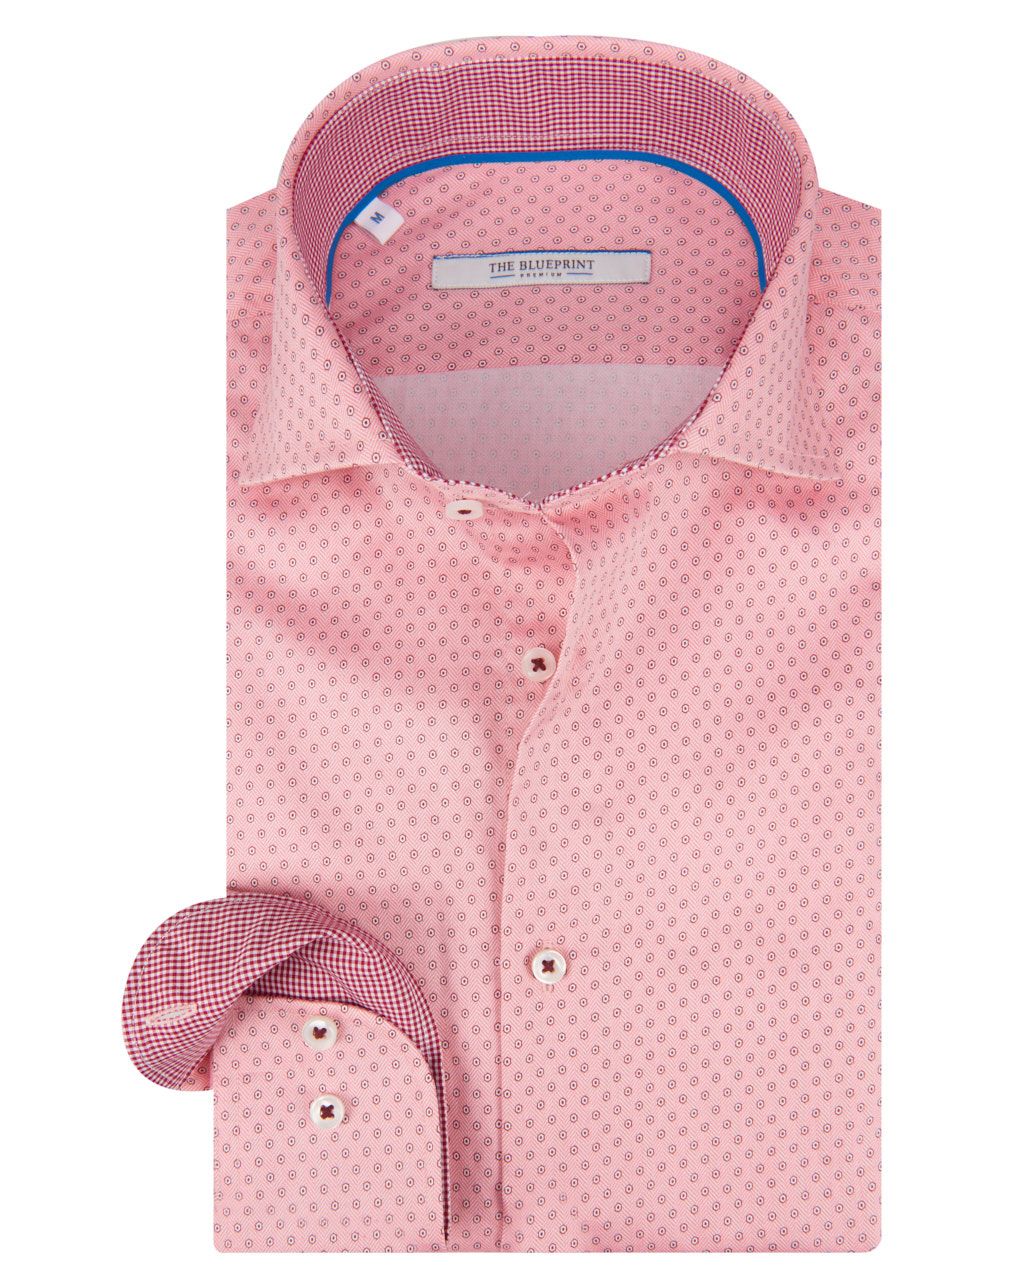 The BLUEPRINT Premium Trendy overhemd LM Roze print 061890-001-L